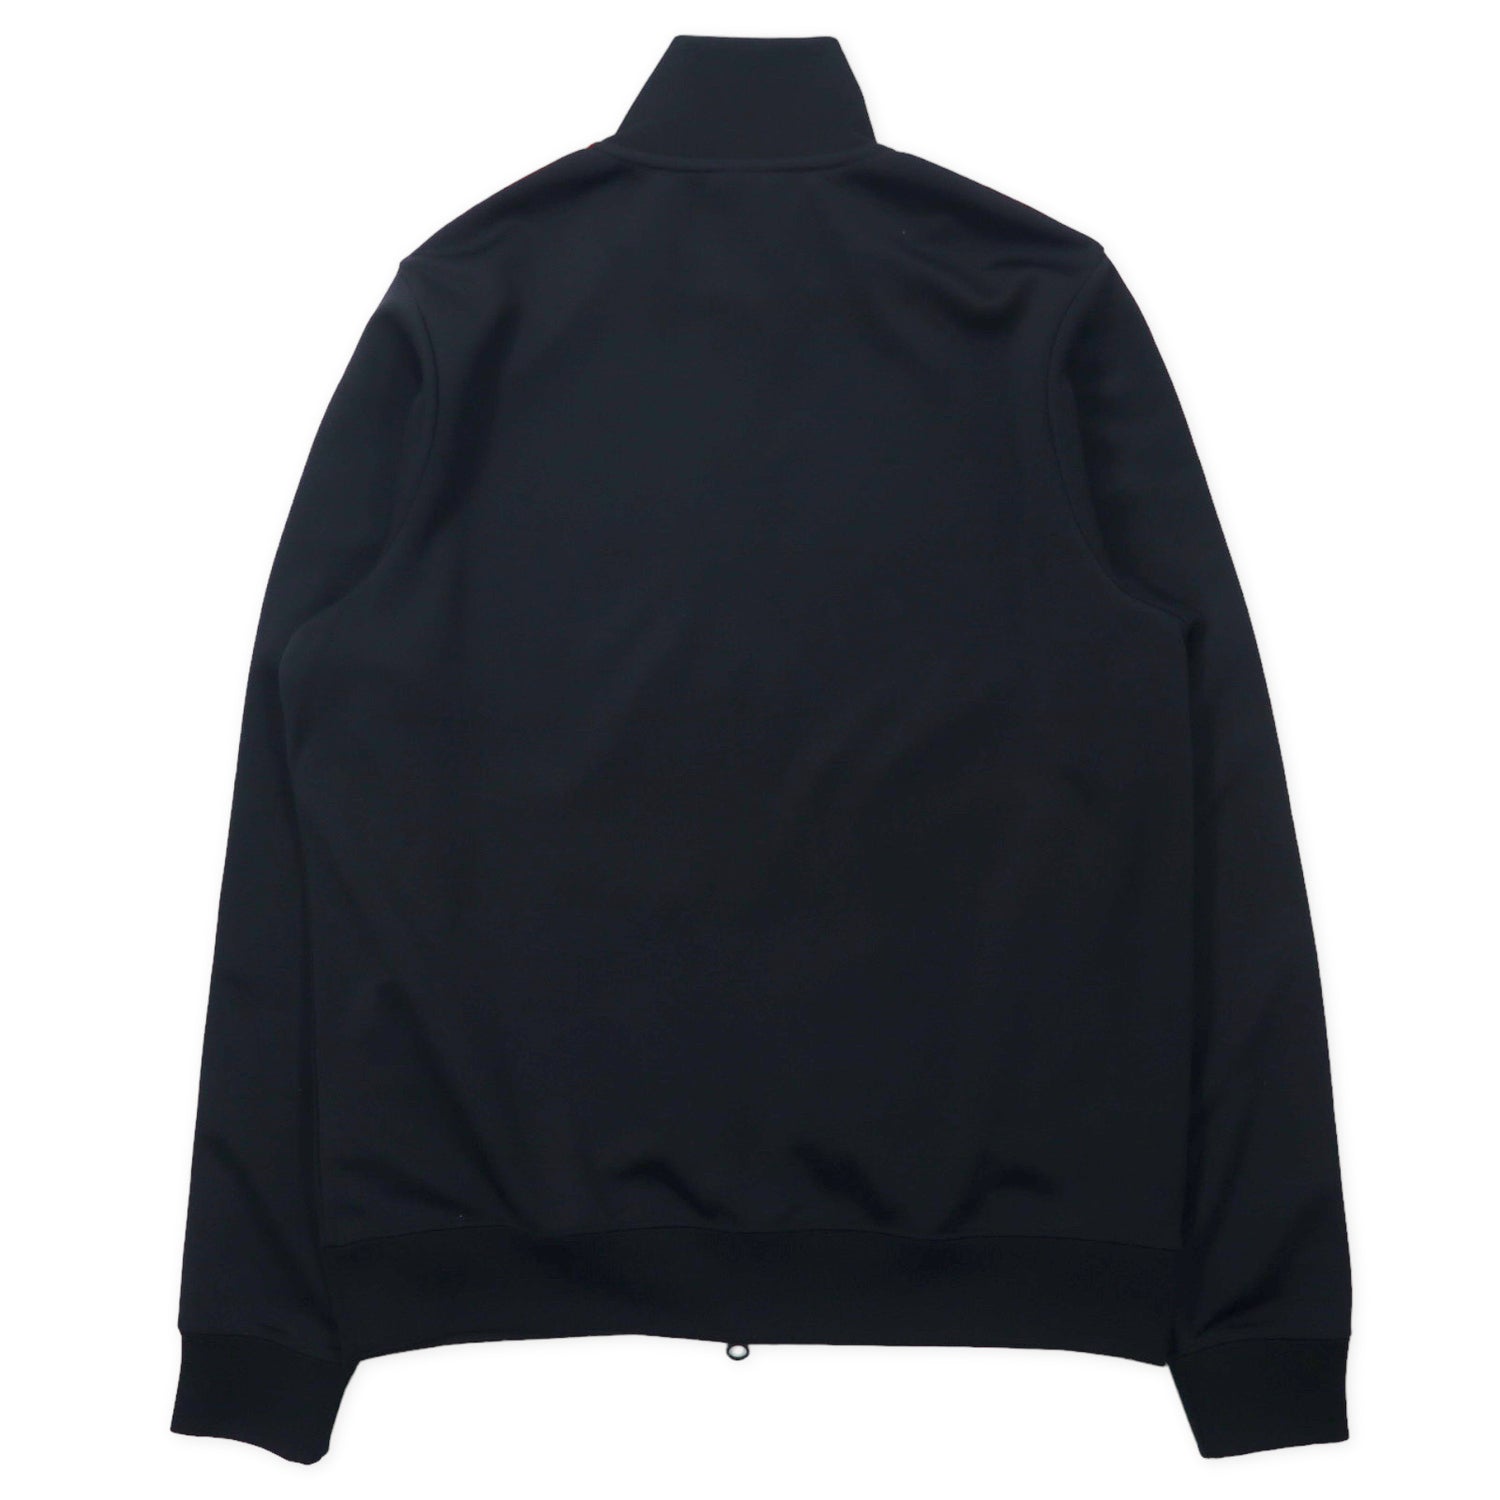 NIKE TRACK JACKET Jersey M Black Polyester Swash Logo Sideline 